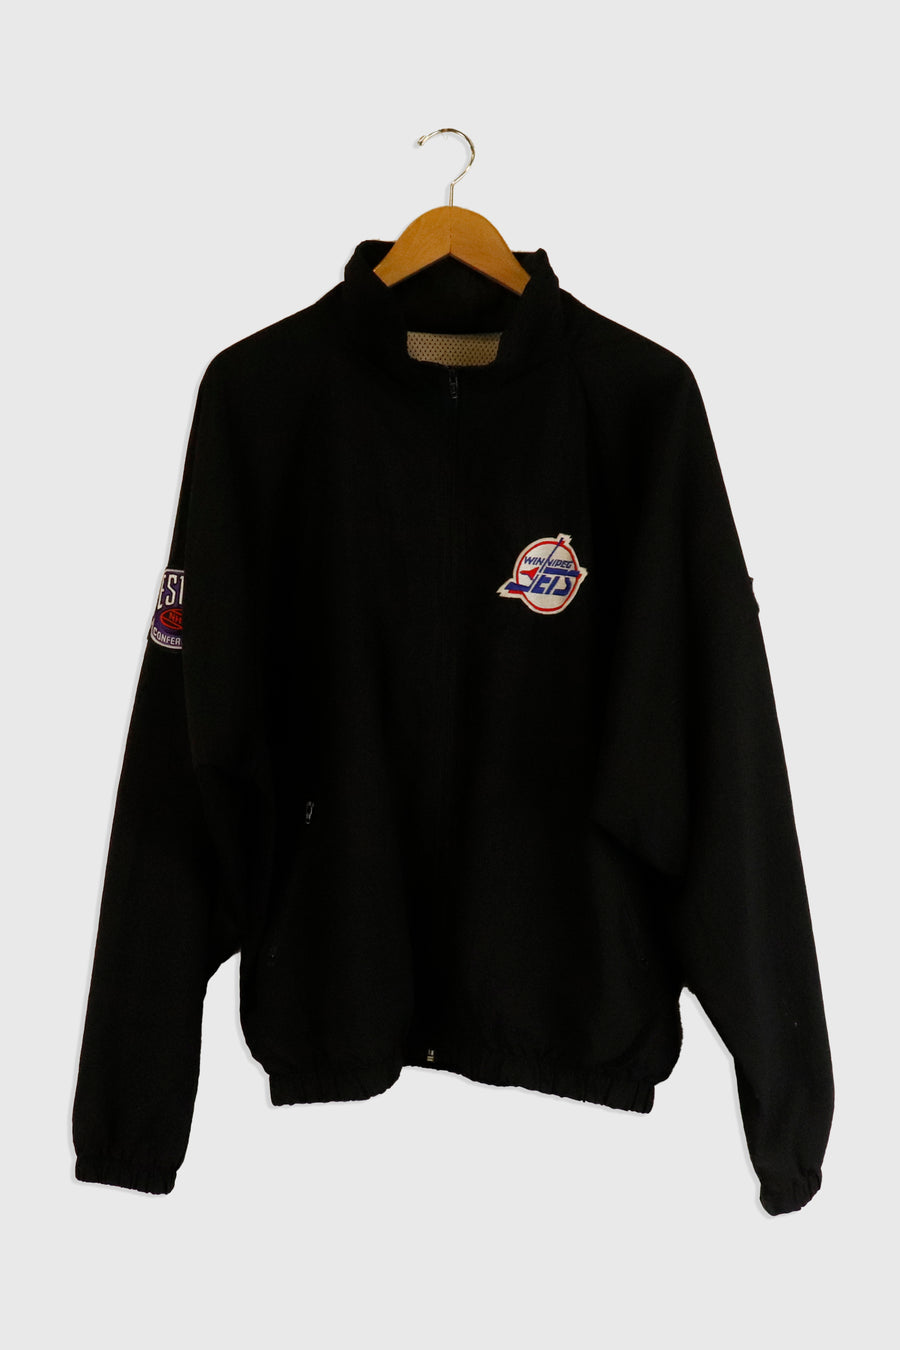 Vintage NHL Winnipeg Jets Patch Full Zip Jacket Sz XL